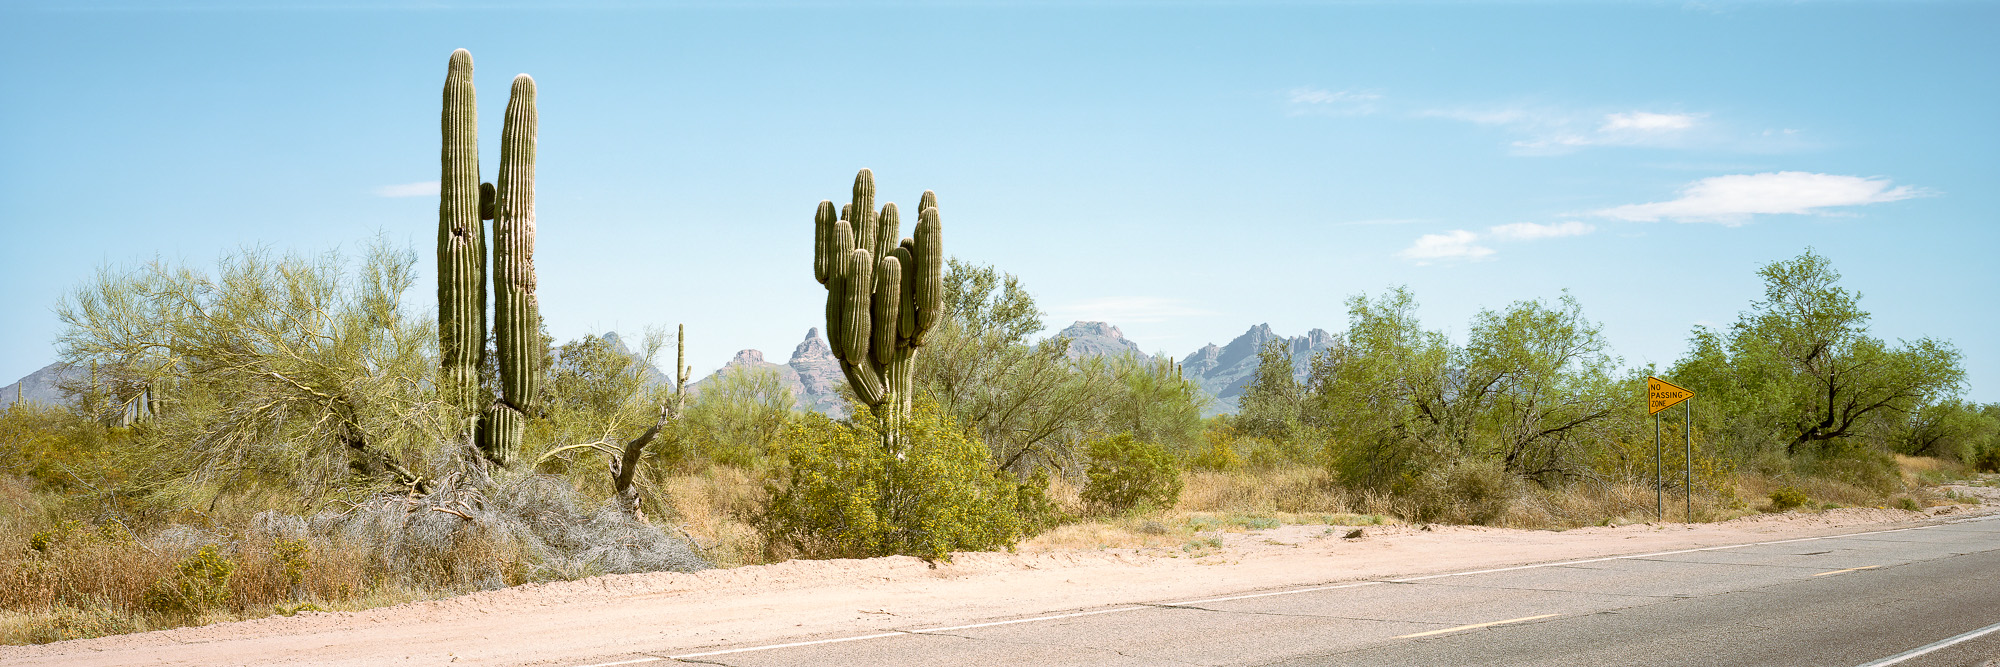 Arizona Highway